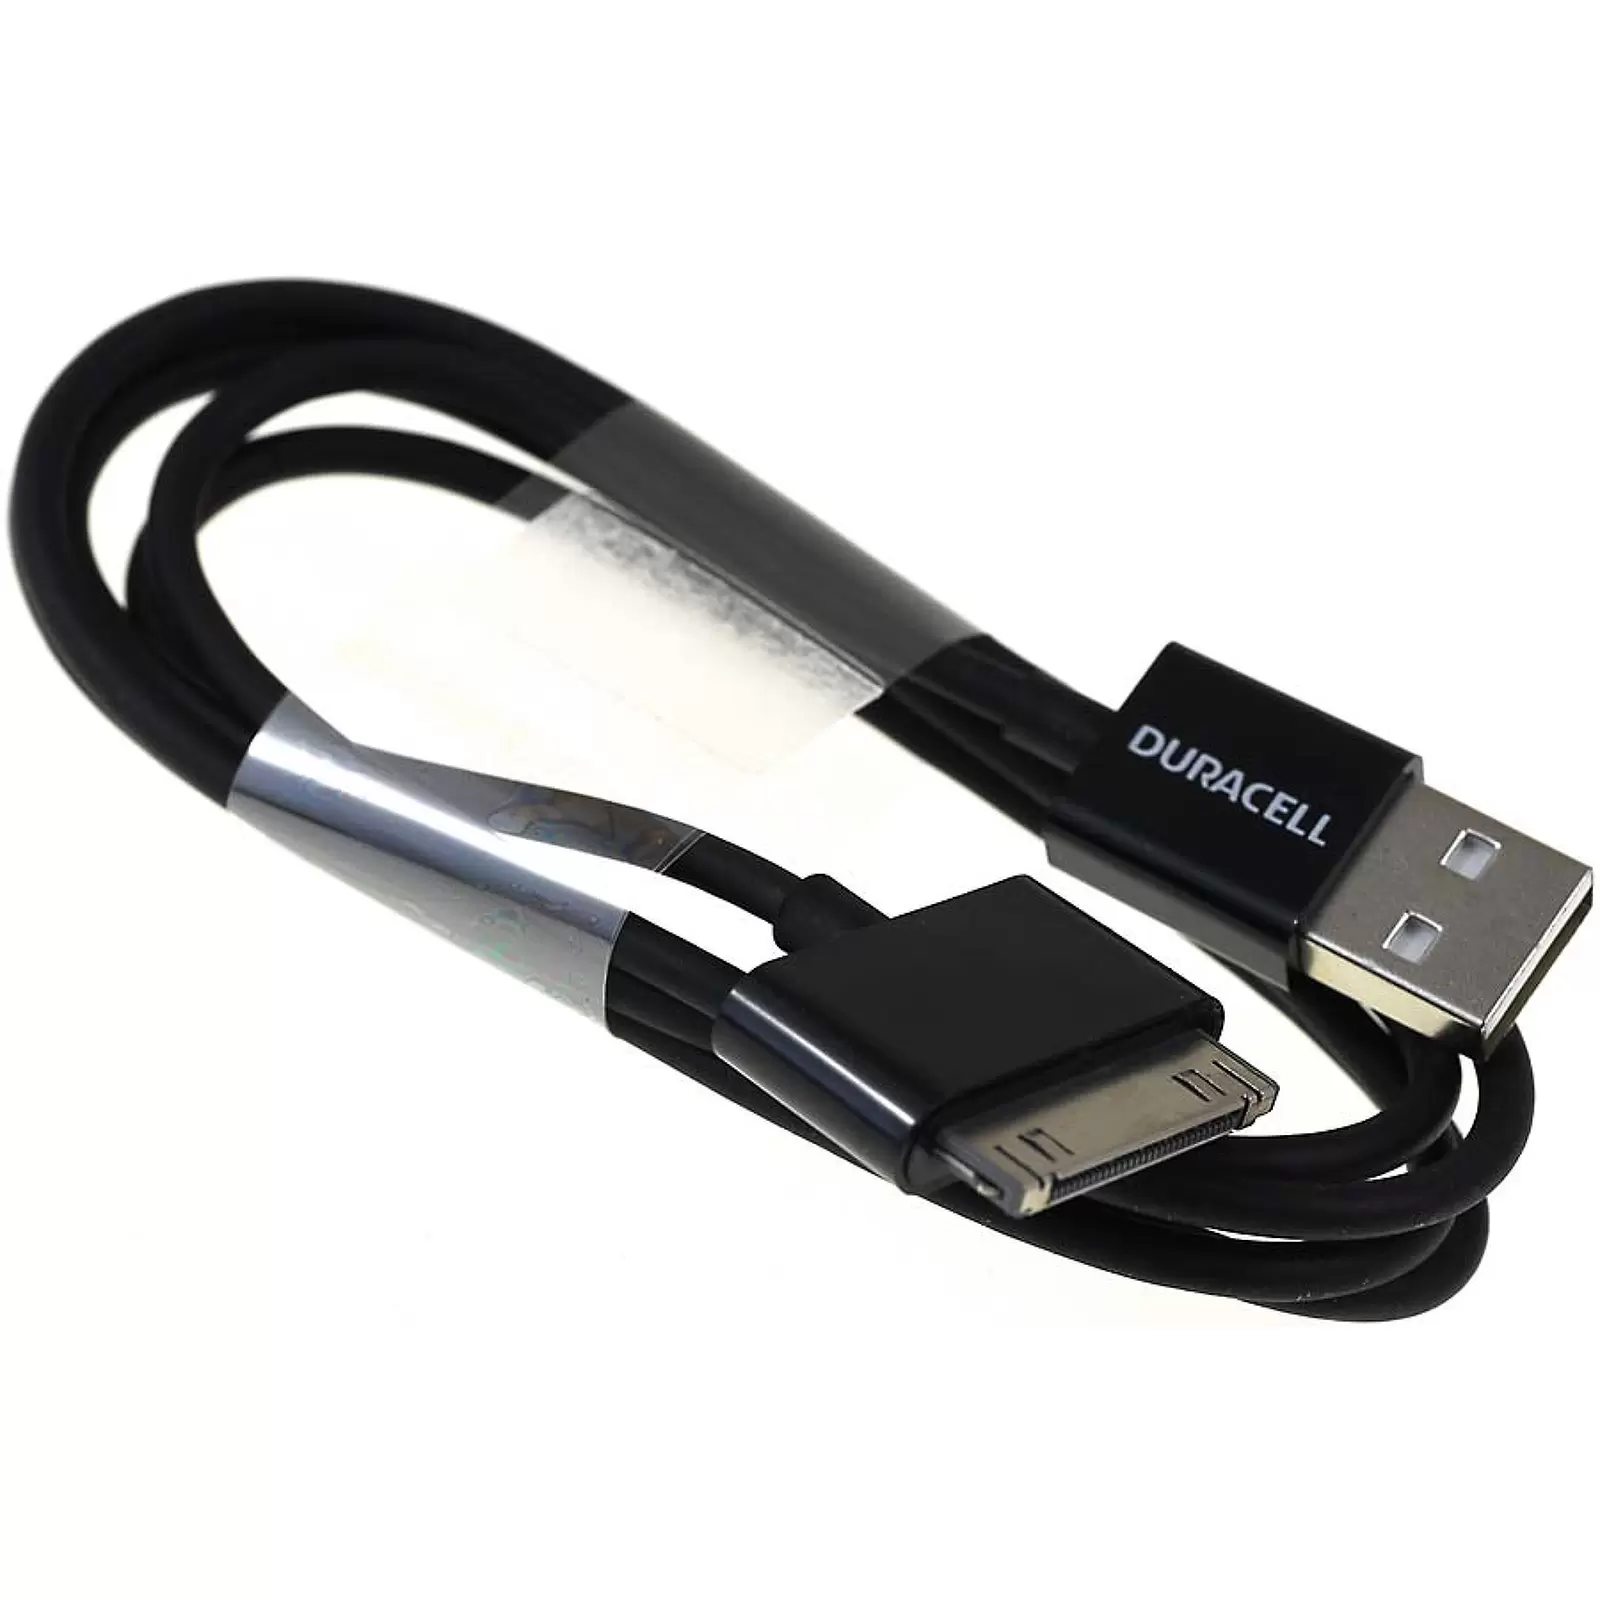 Verbindungskabel 30pin auf USB für iPhone 4, 4S, 3G, 3Gs, iPad 1, 2, 3, iPod classic, nano etc, 1m